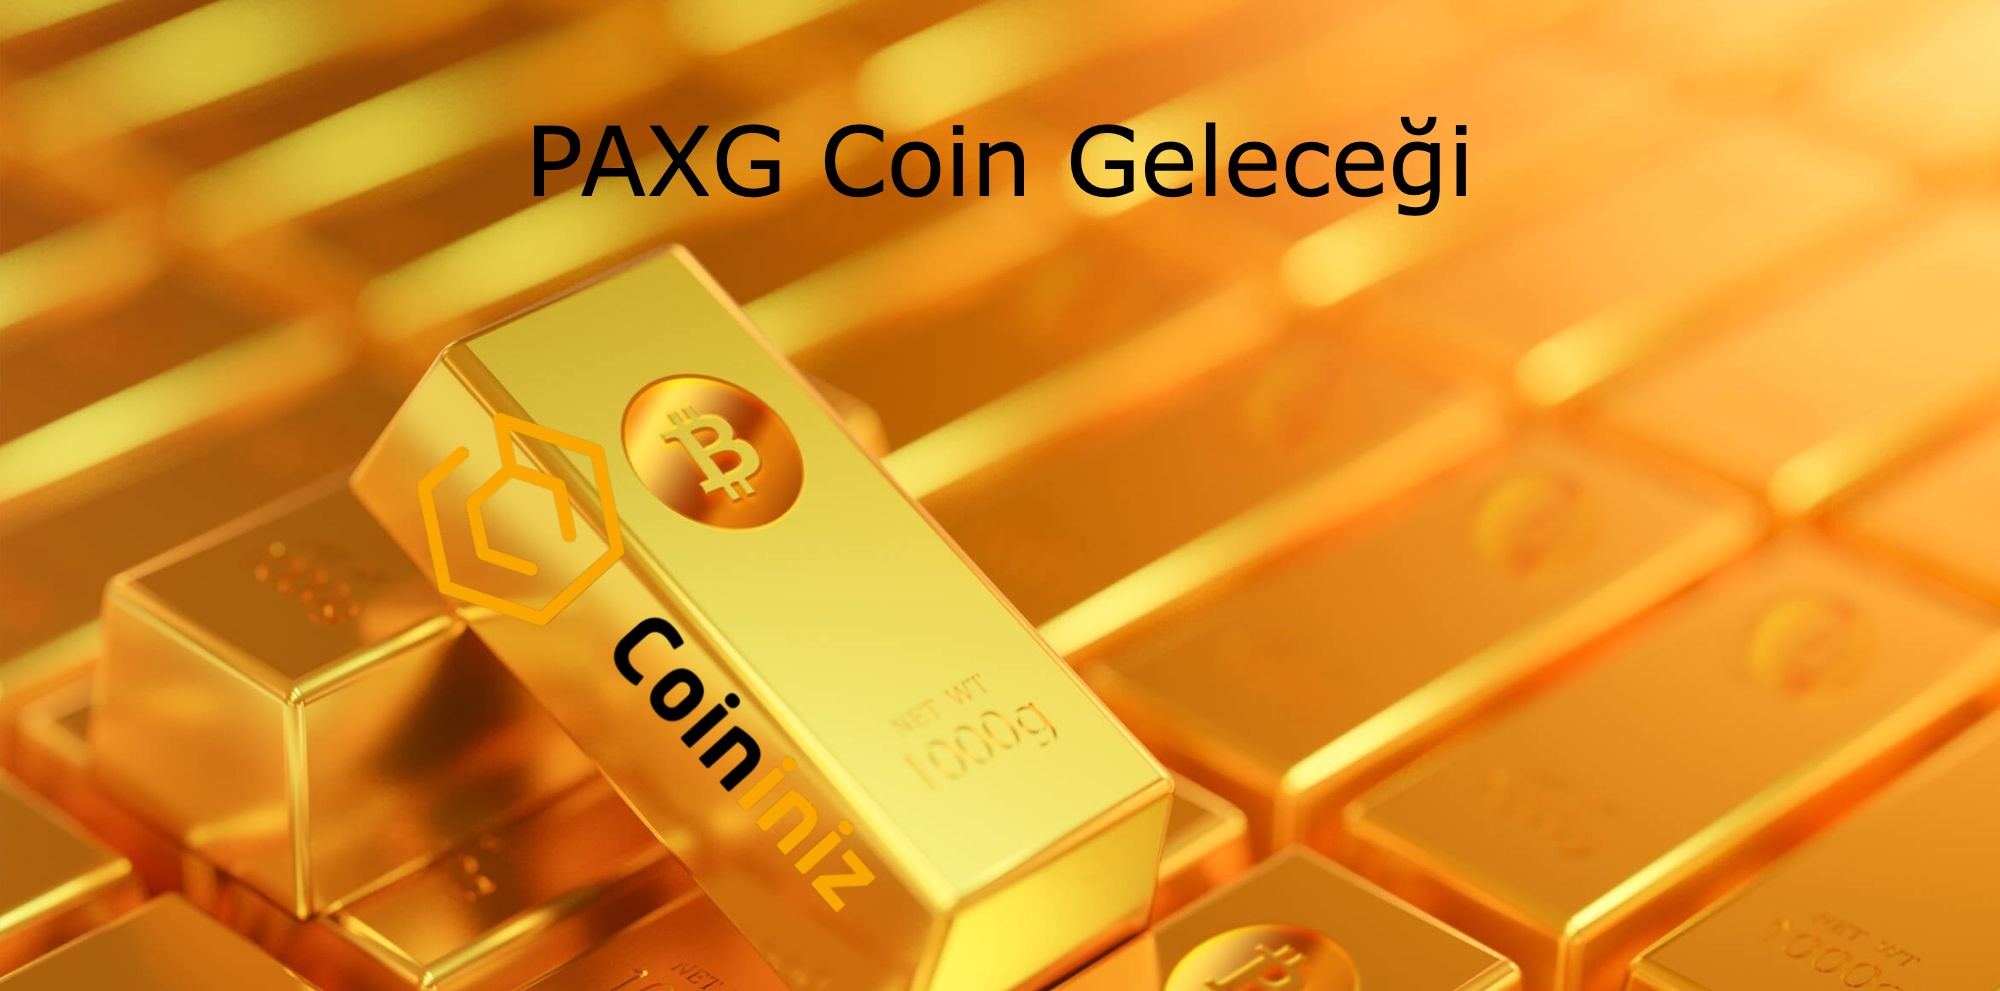 PAXG Coin Geleceği (2022)